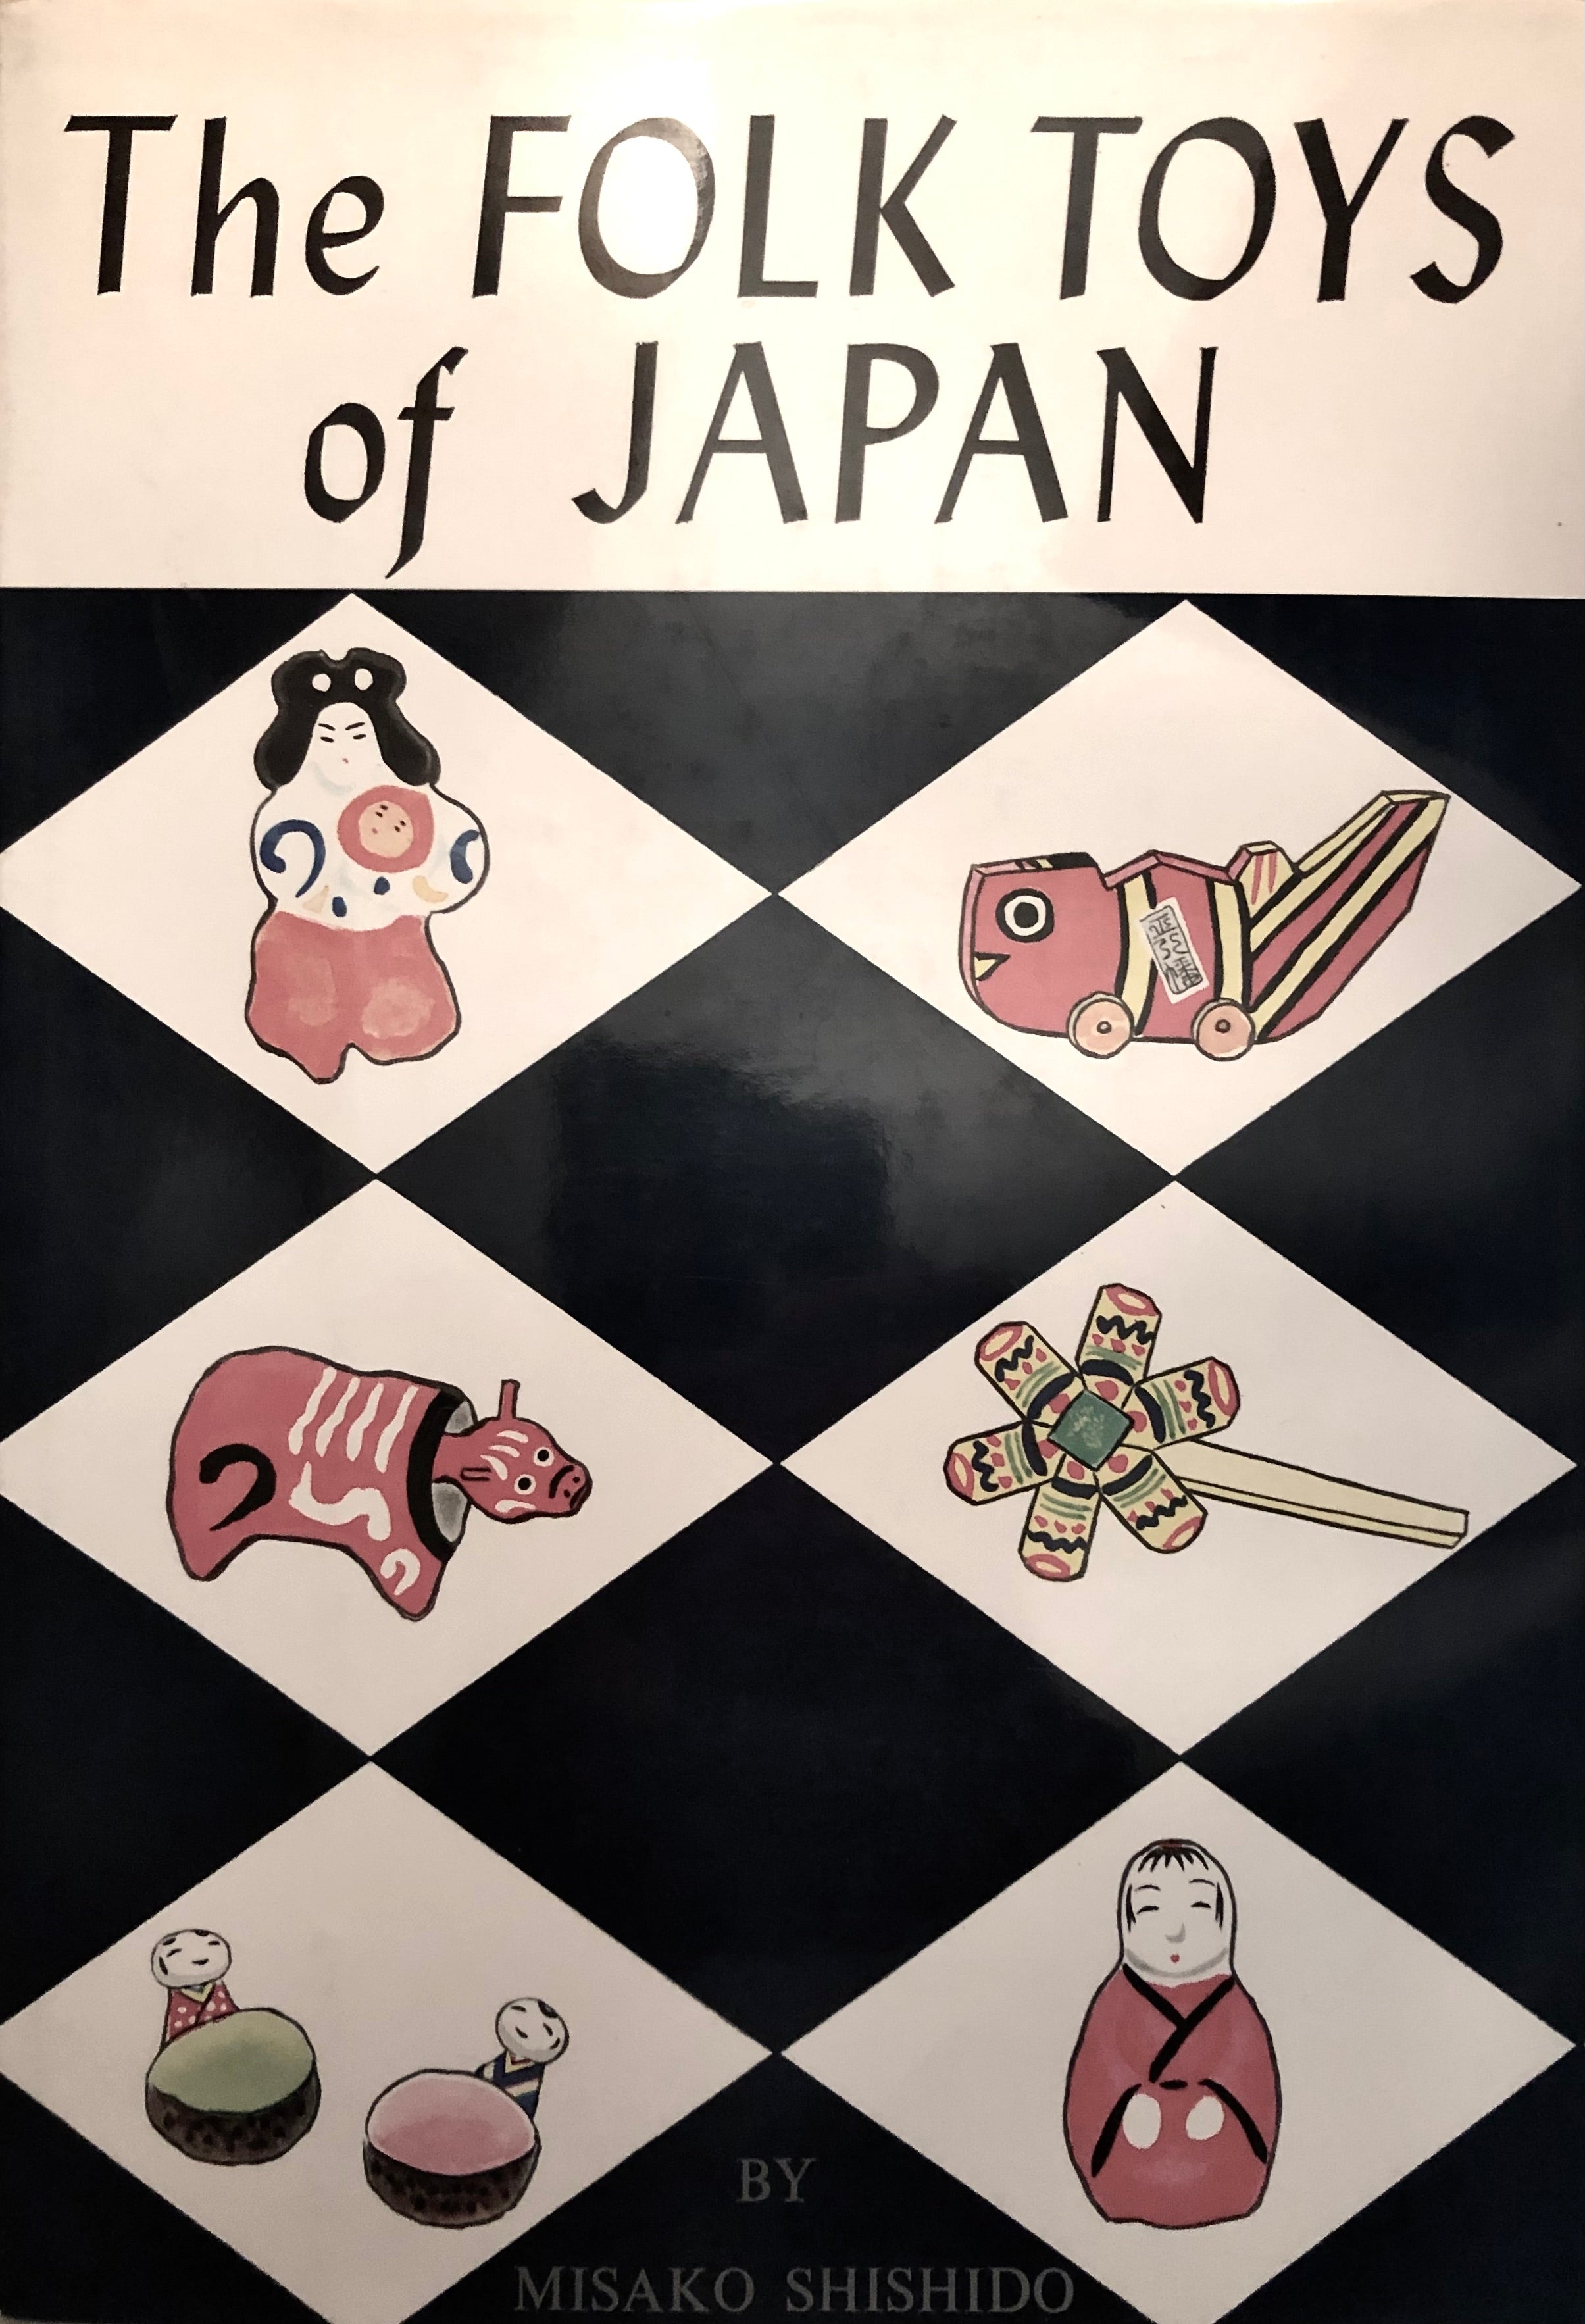 The Folk Toys of Japan by Mistake Shishido